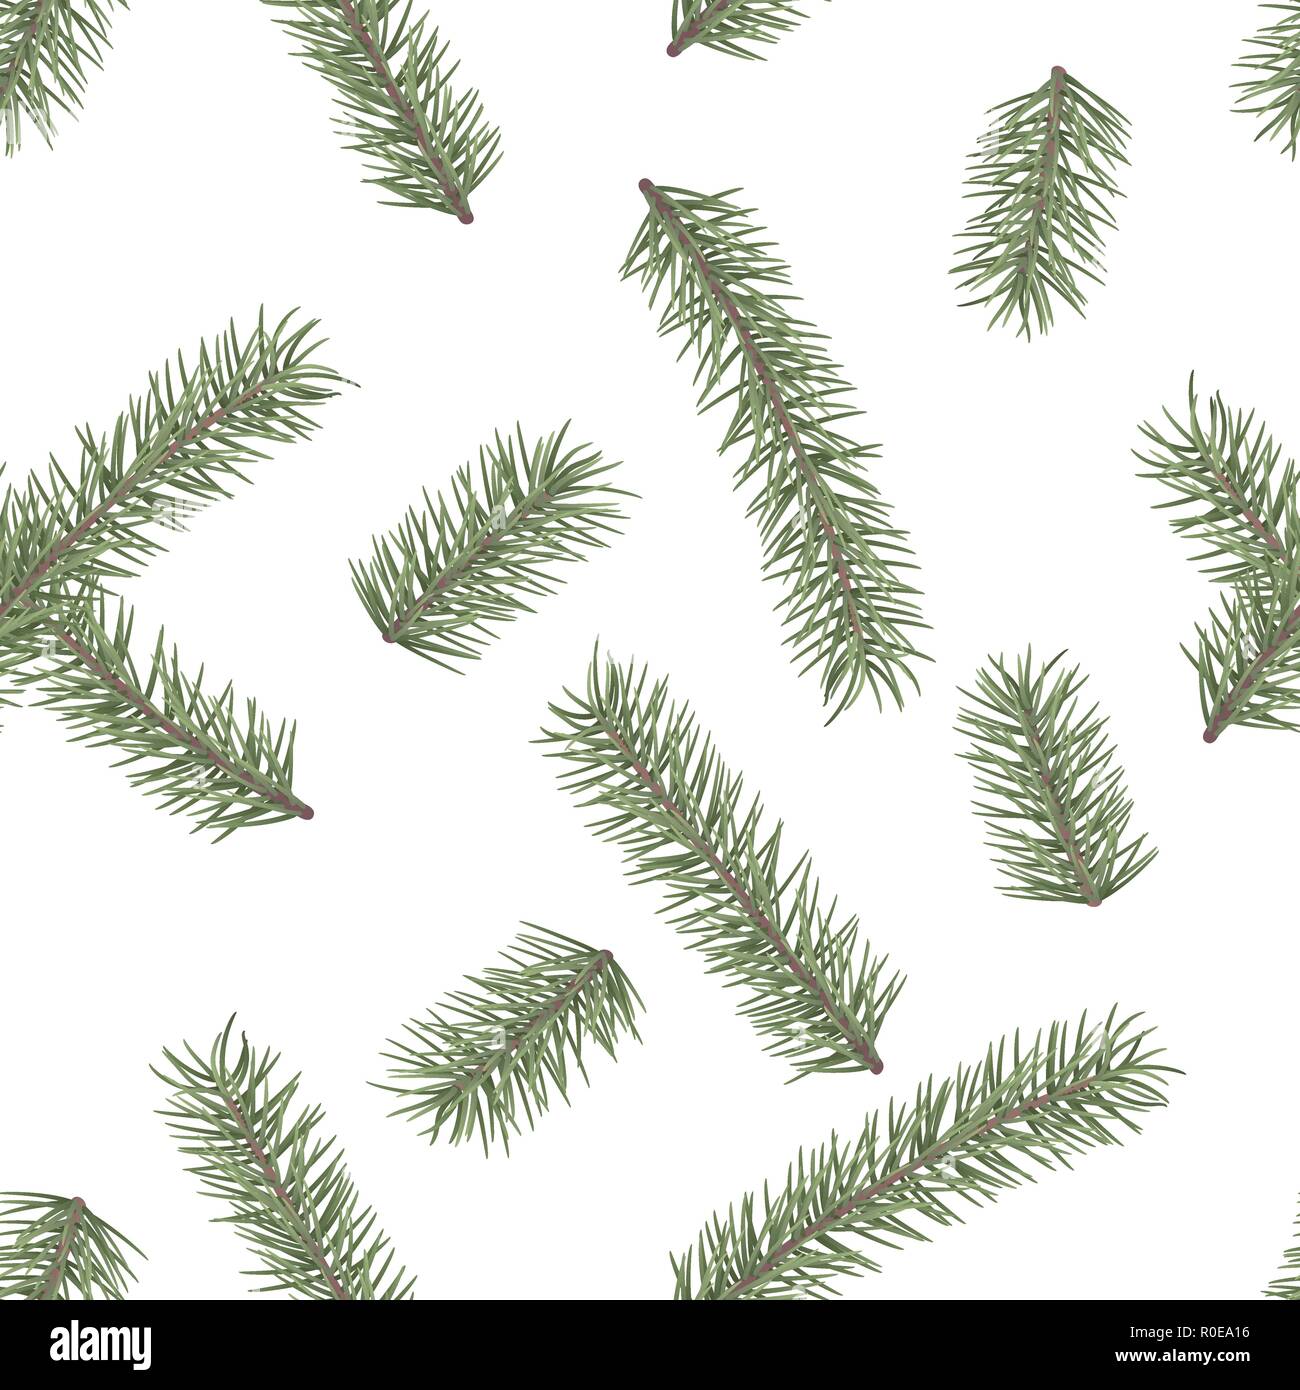 Fir branch seamless pattern. Winter holiday decor element. Vectro illustration Stock Vector